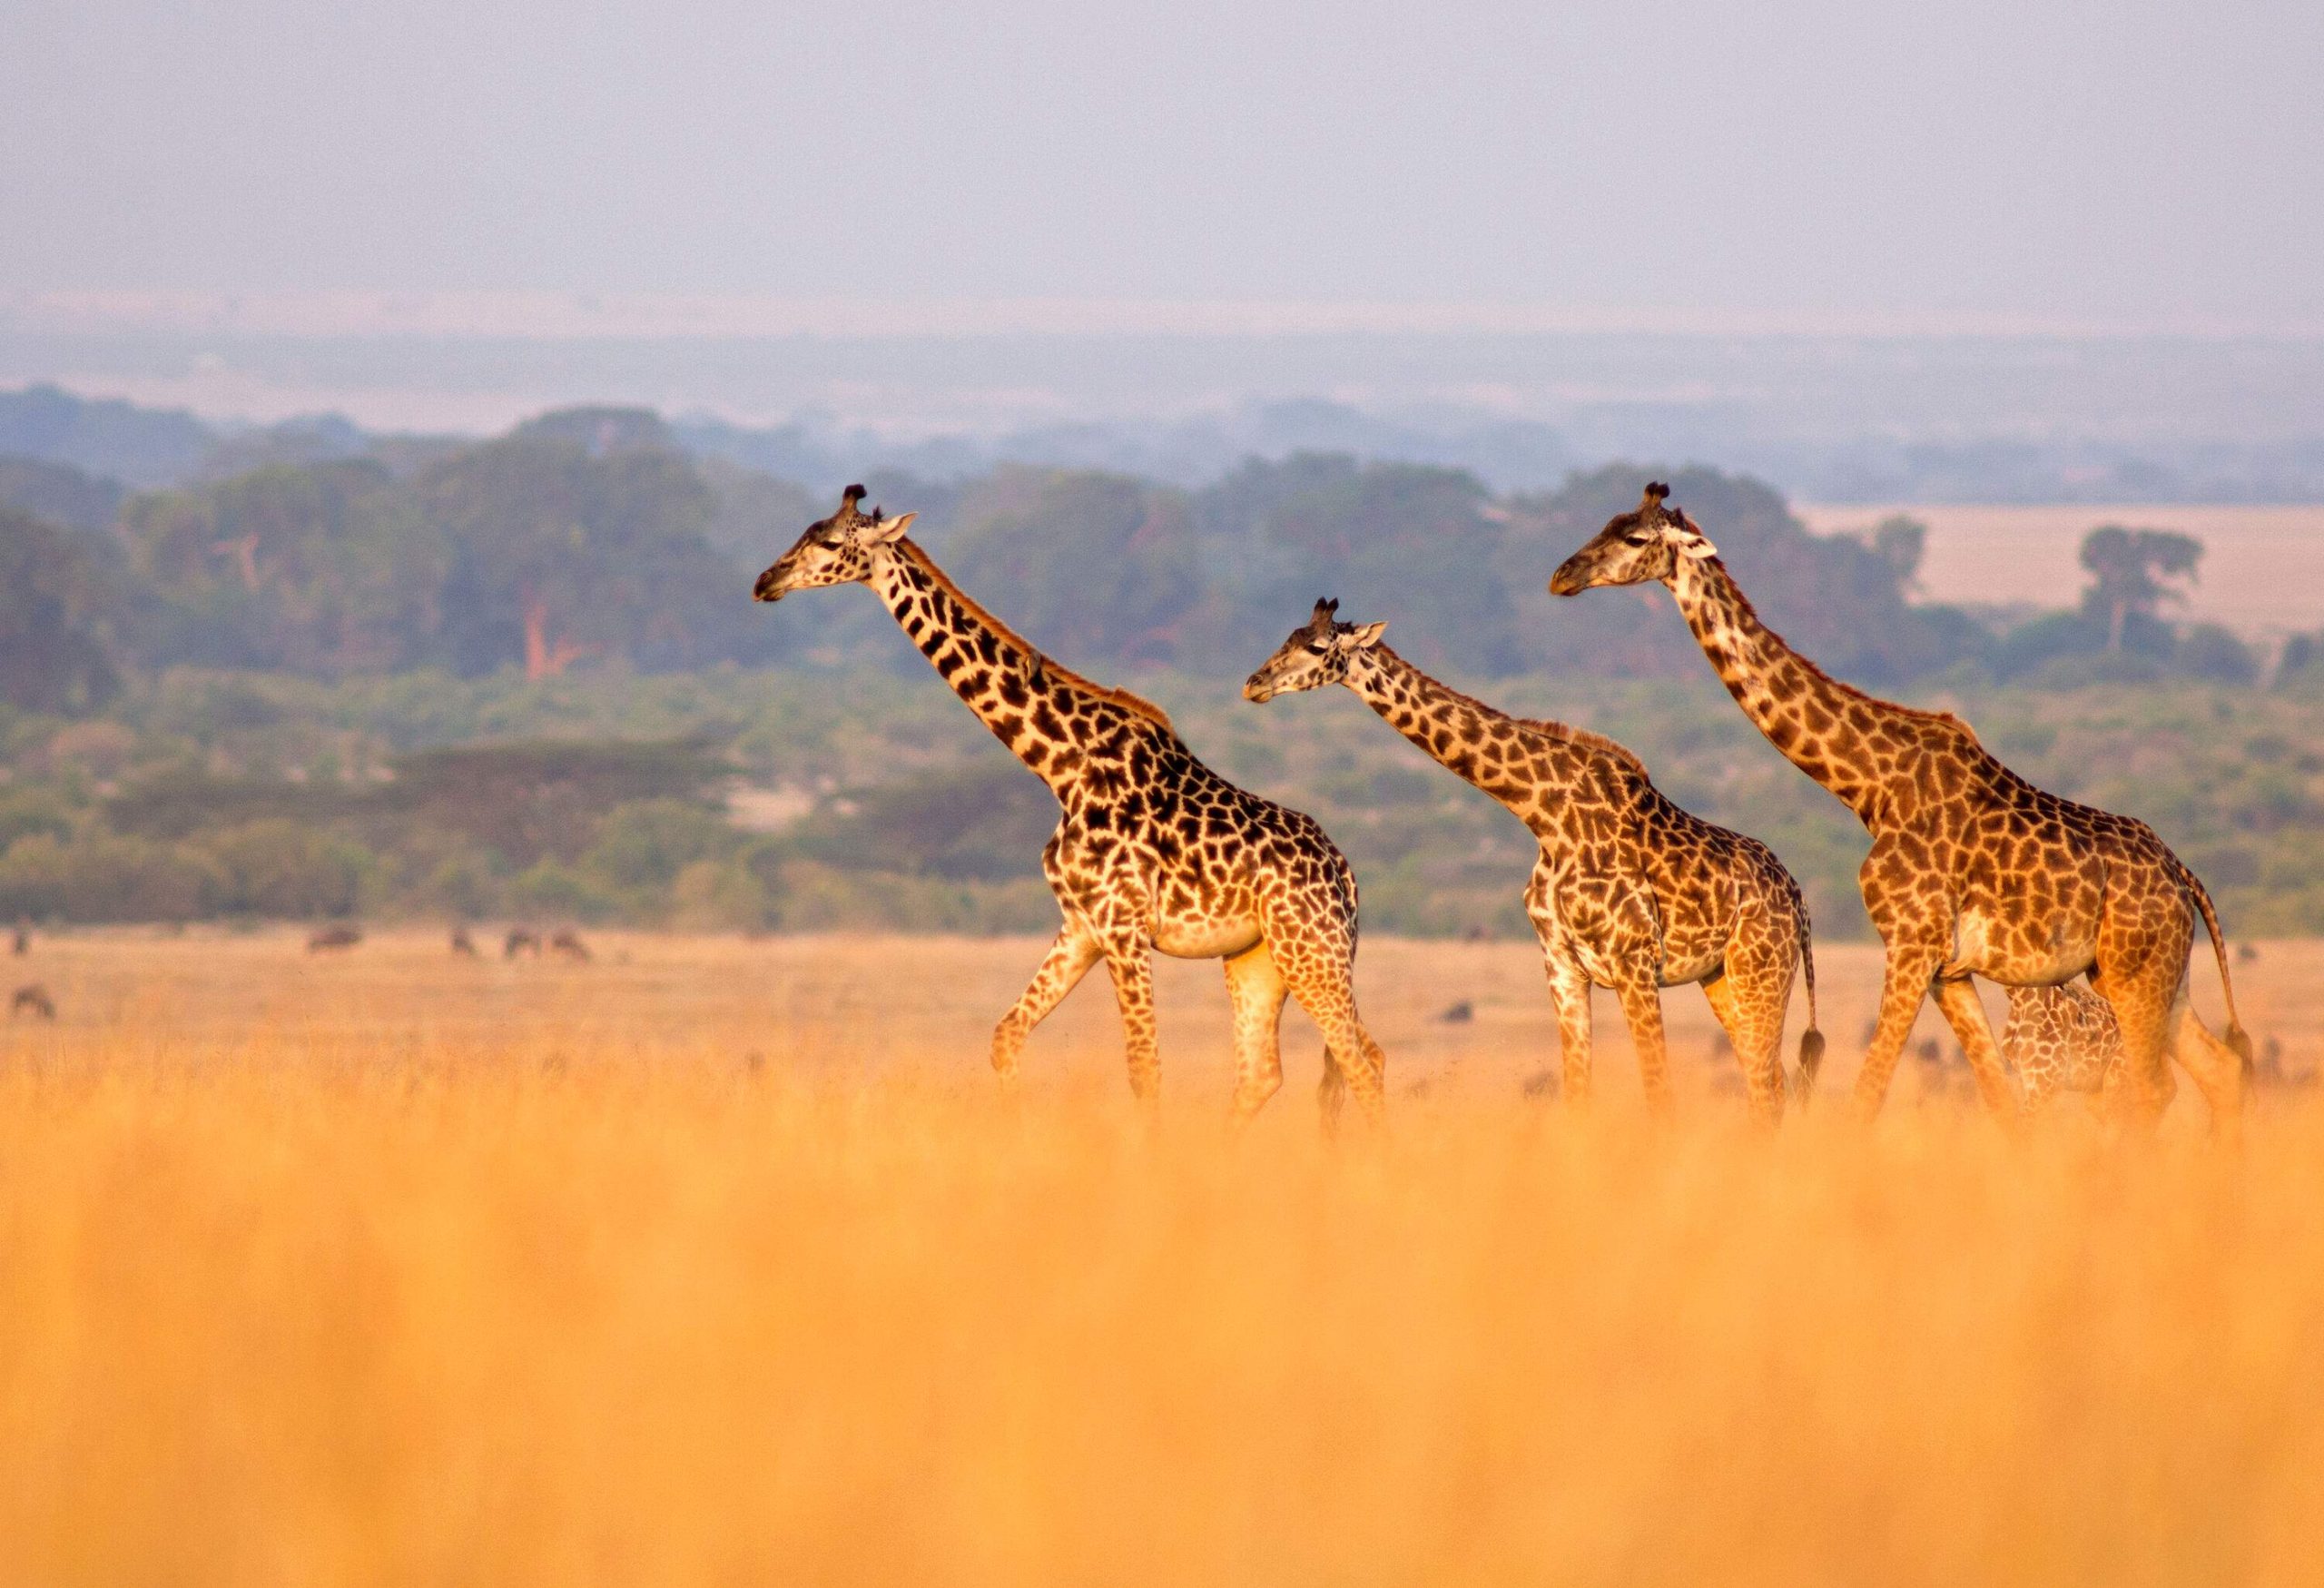 Three towering giraffes in a classic safari setting.